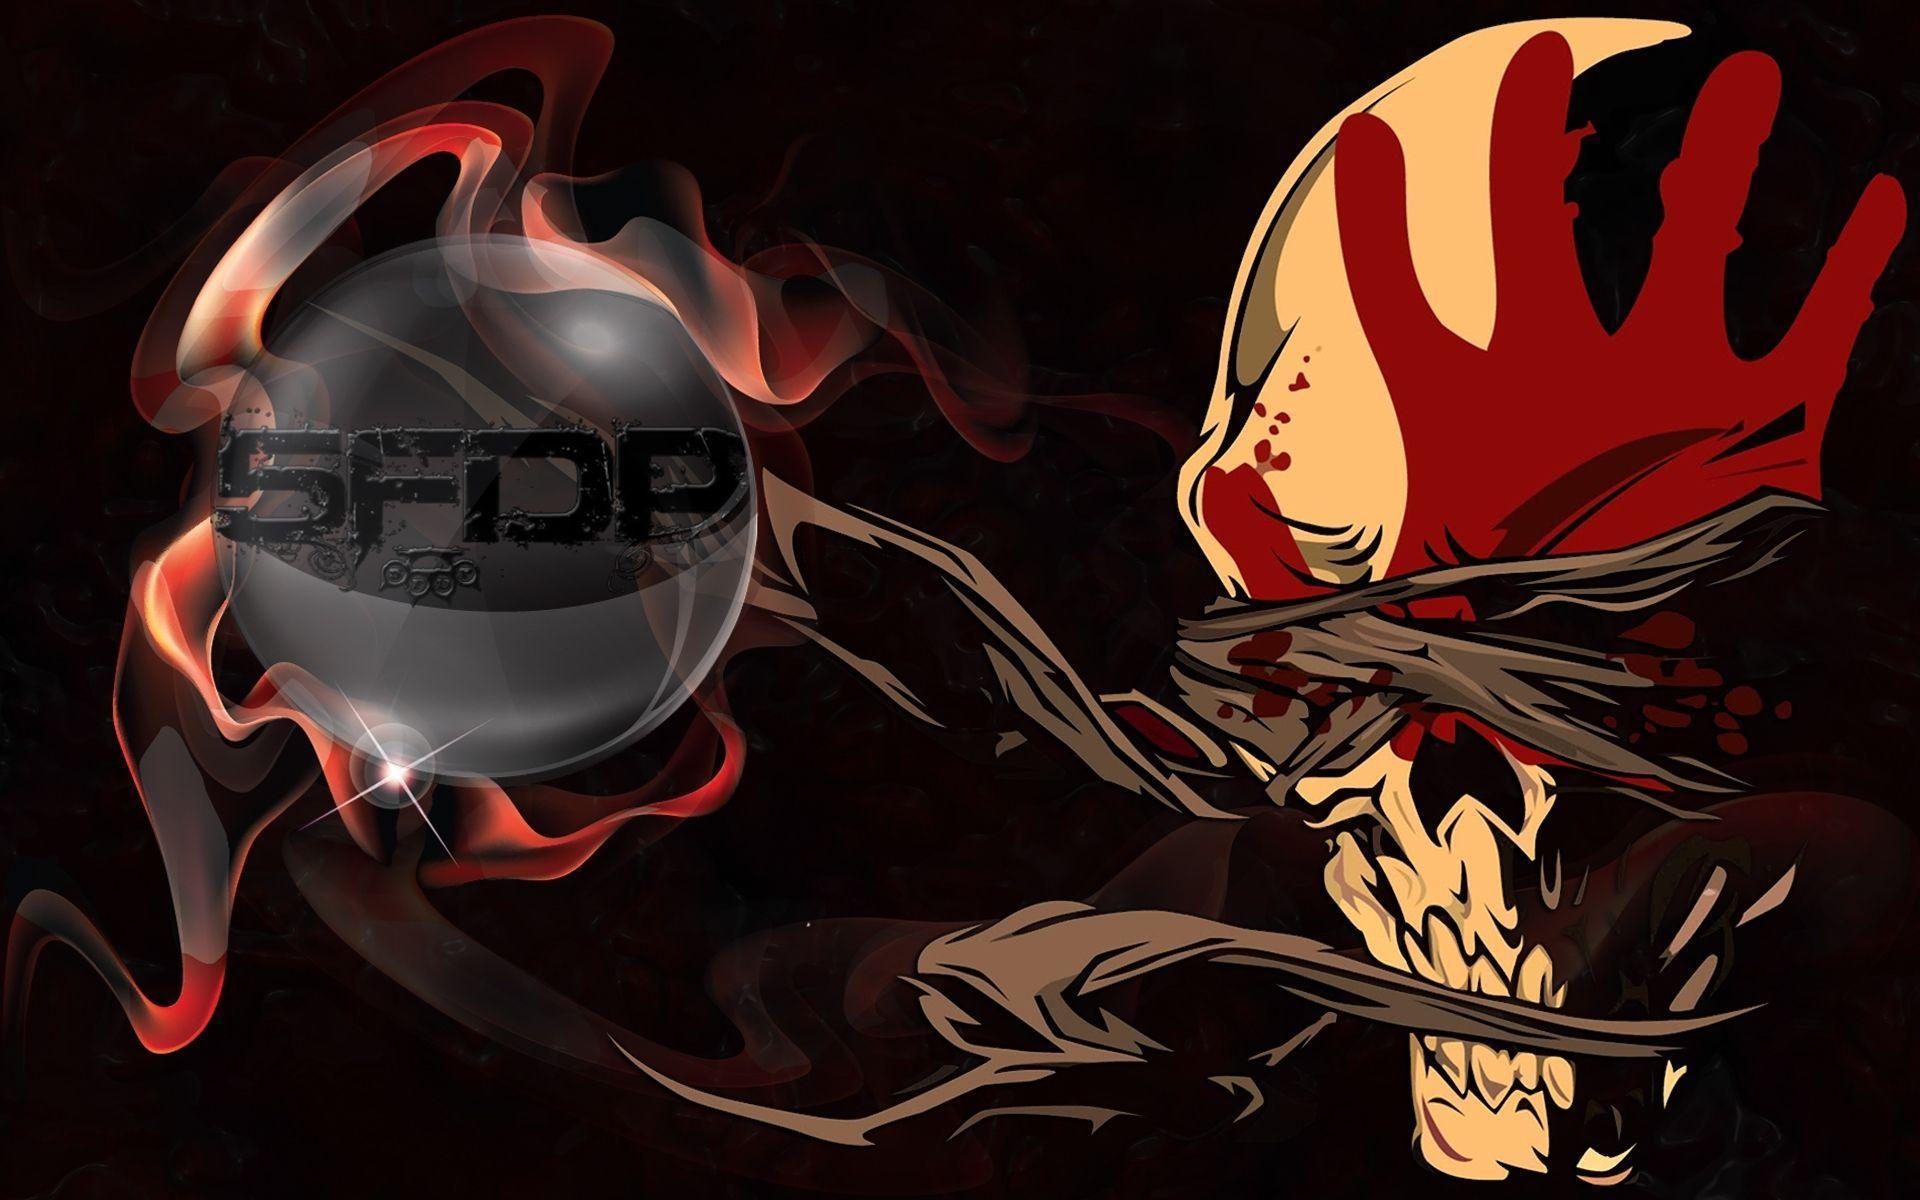 Five Finger Death Punch Wallpaper HD Download